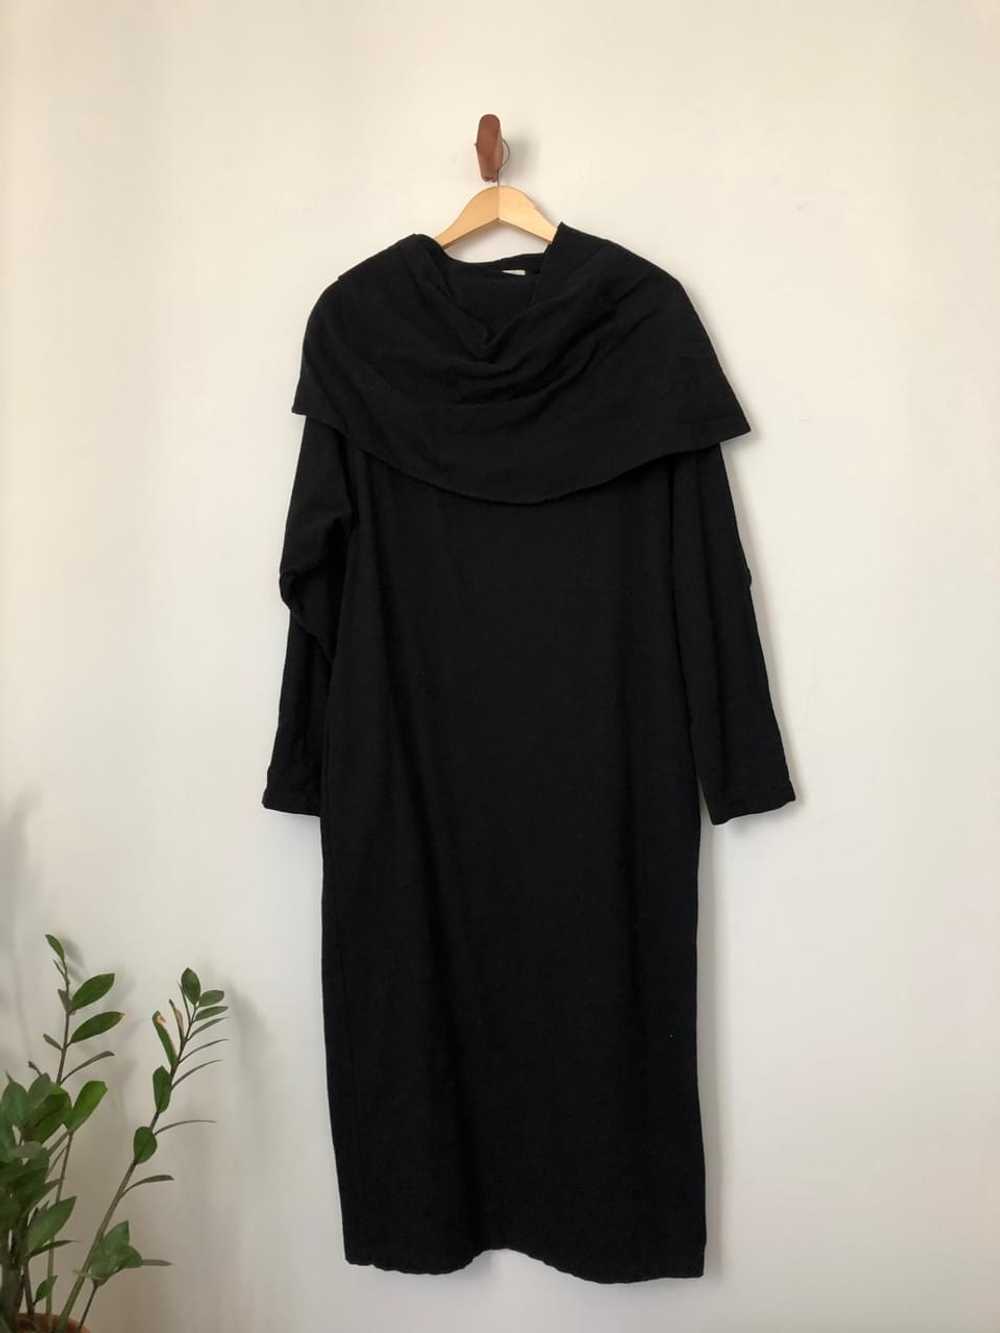 Black Crane Shell Dress (XS) - image 2